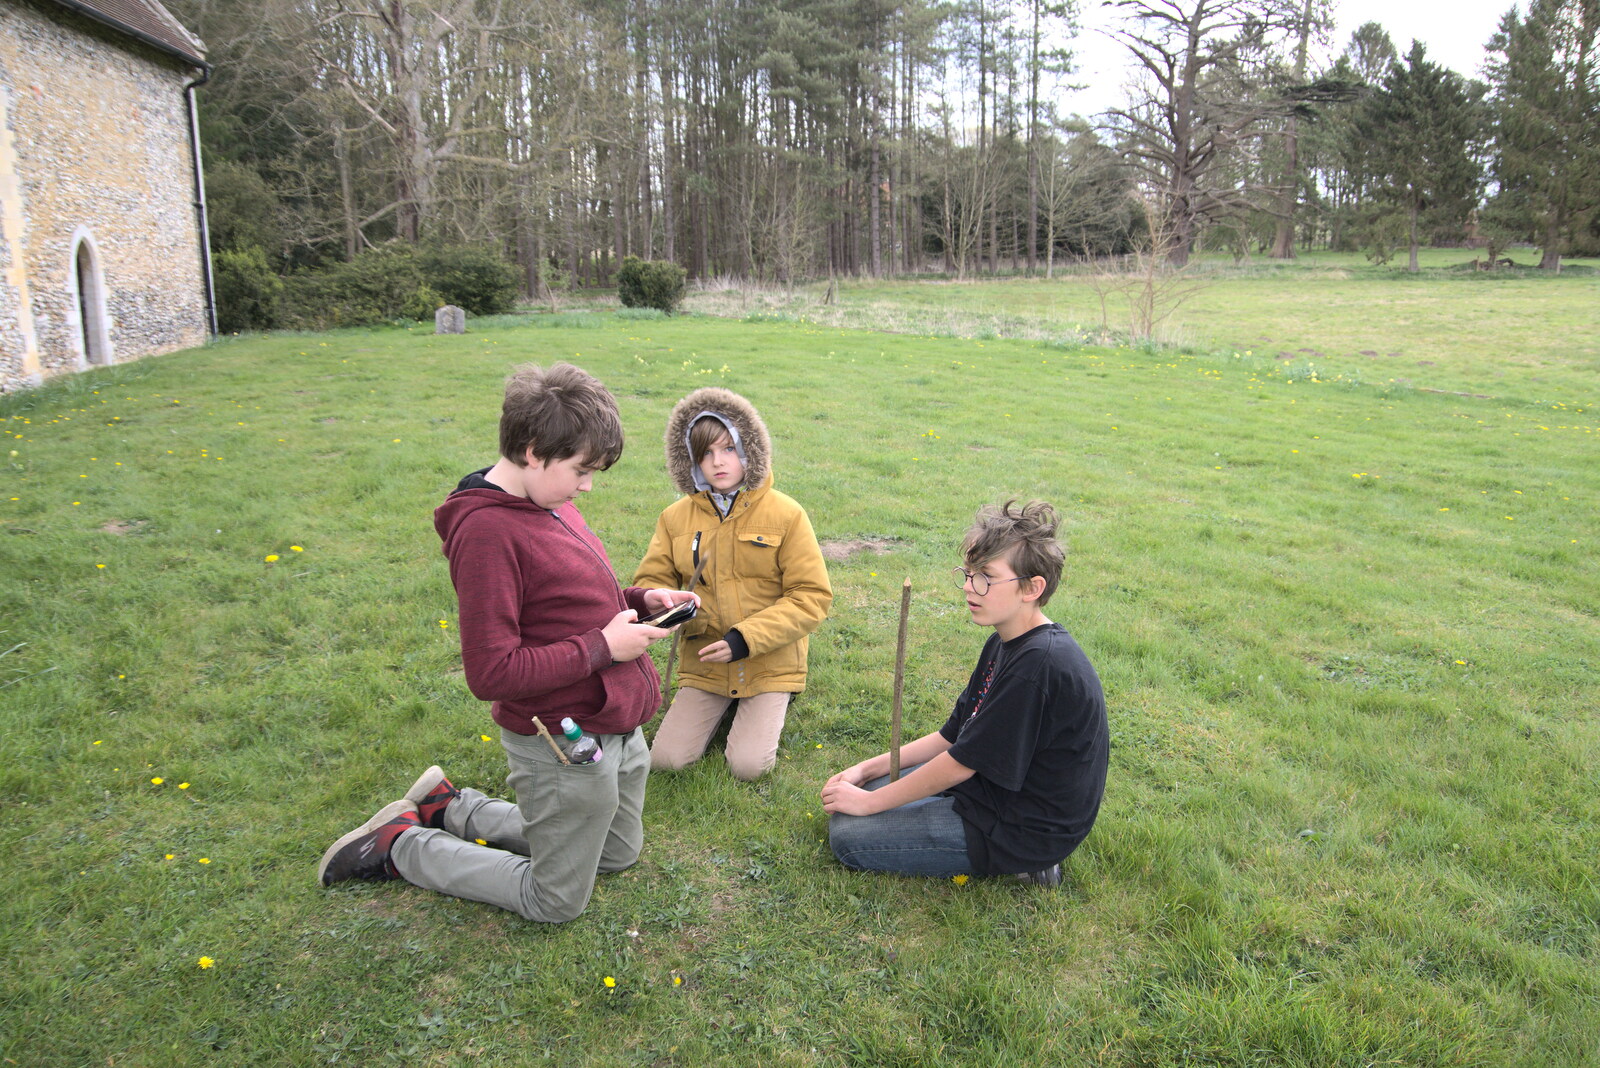 A Camper-Van Trip, West Harling, Norfolk - 13th April 2022: Fred, Harry and Elliot hang around